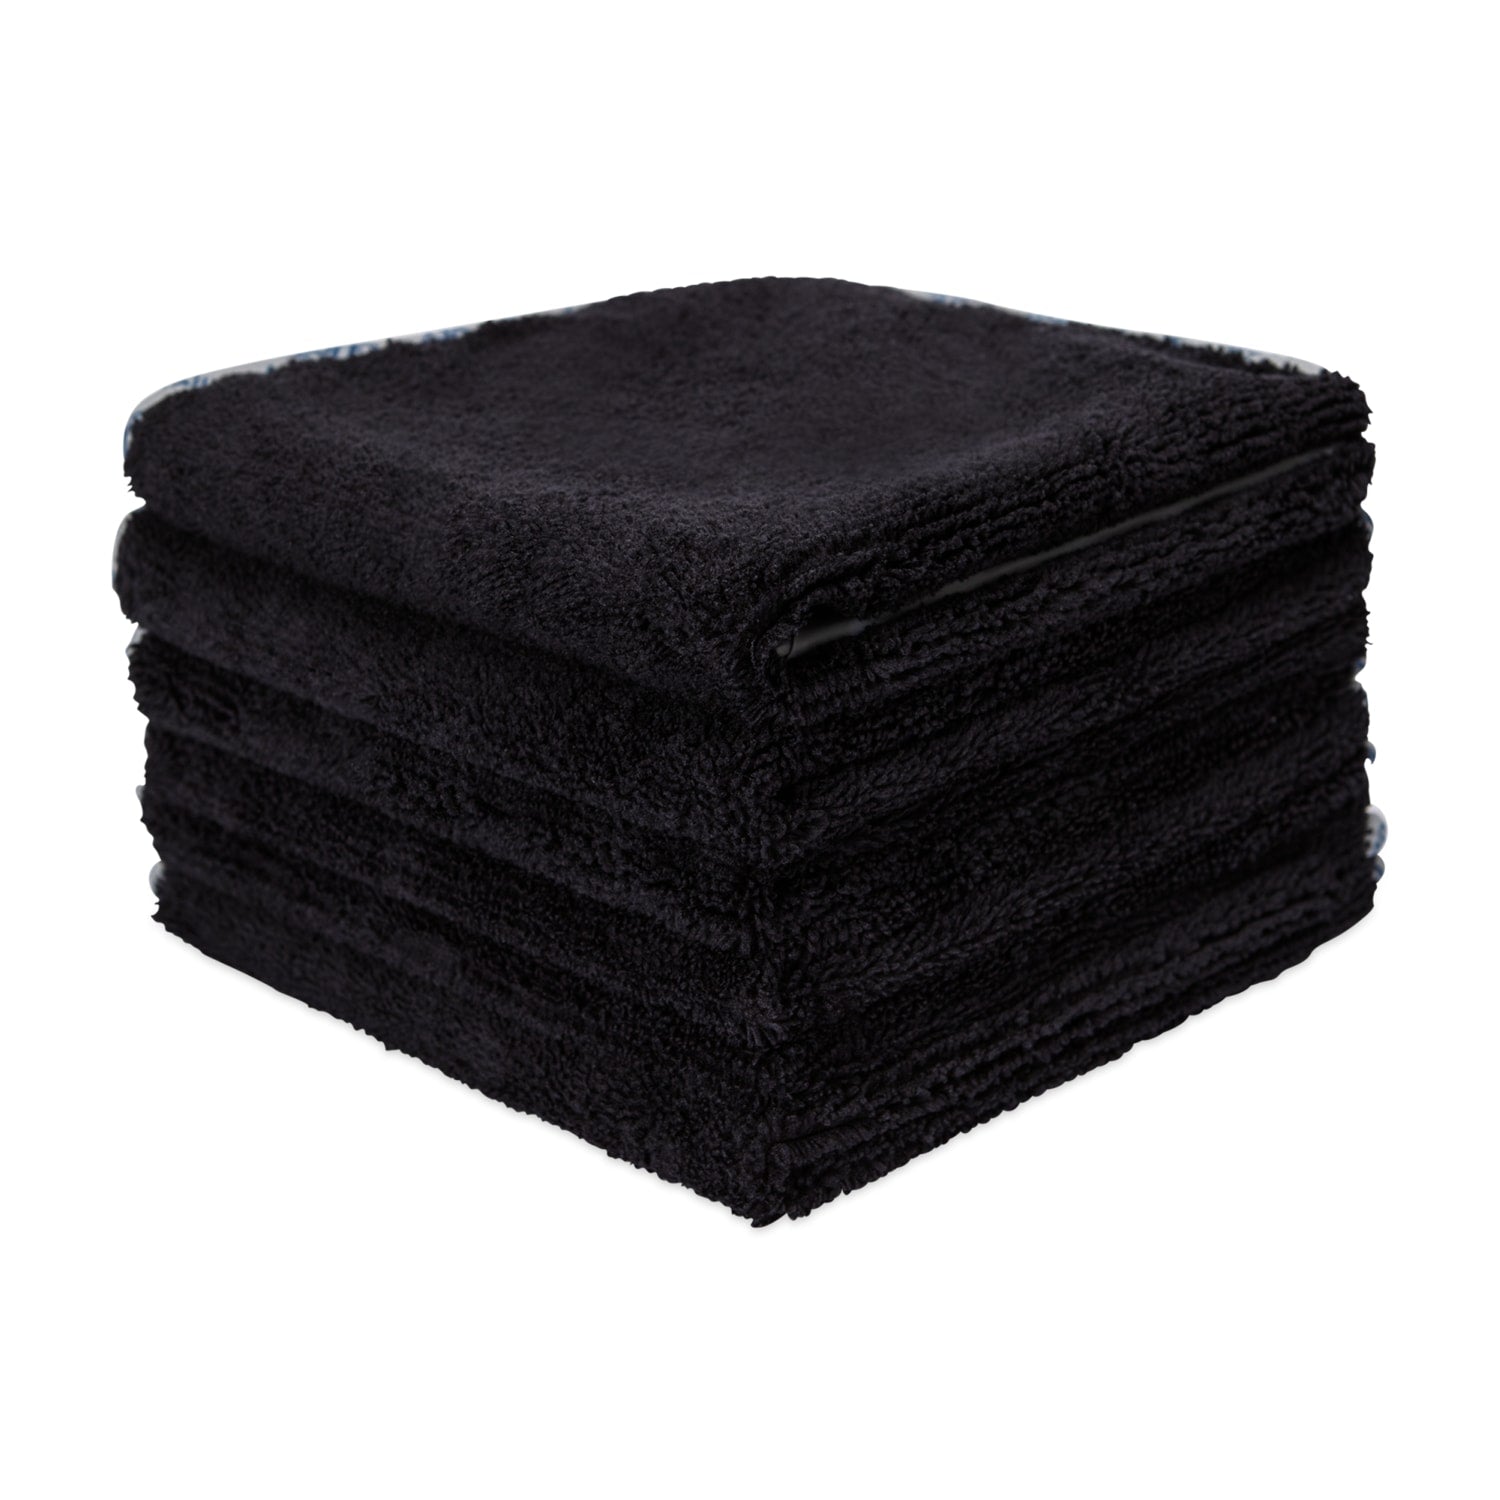 16 x 16 Black Microfiber Towels For Cars 400 GSM